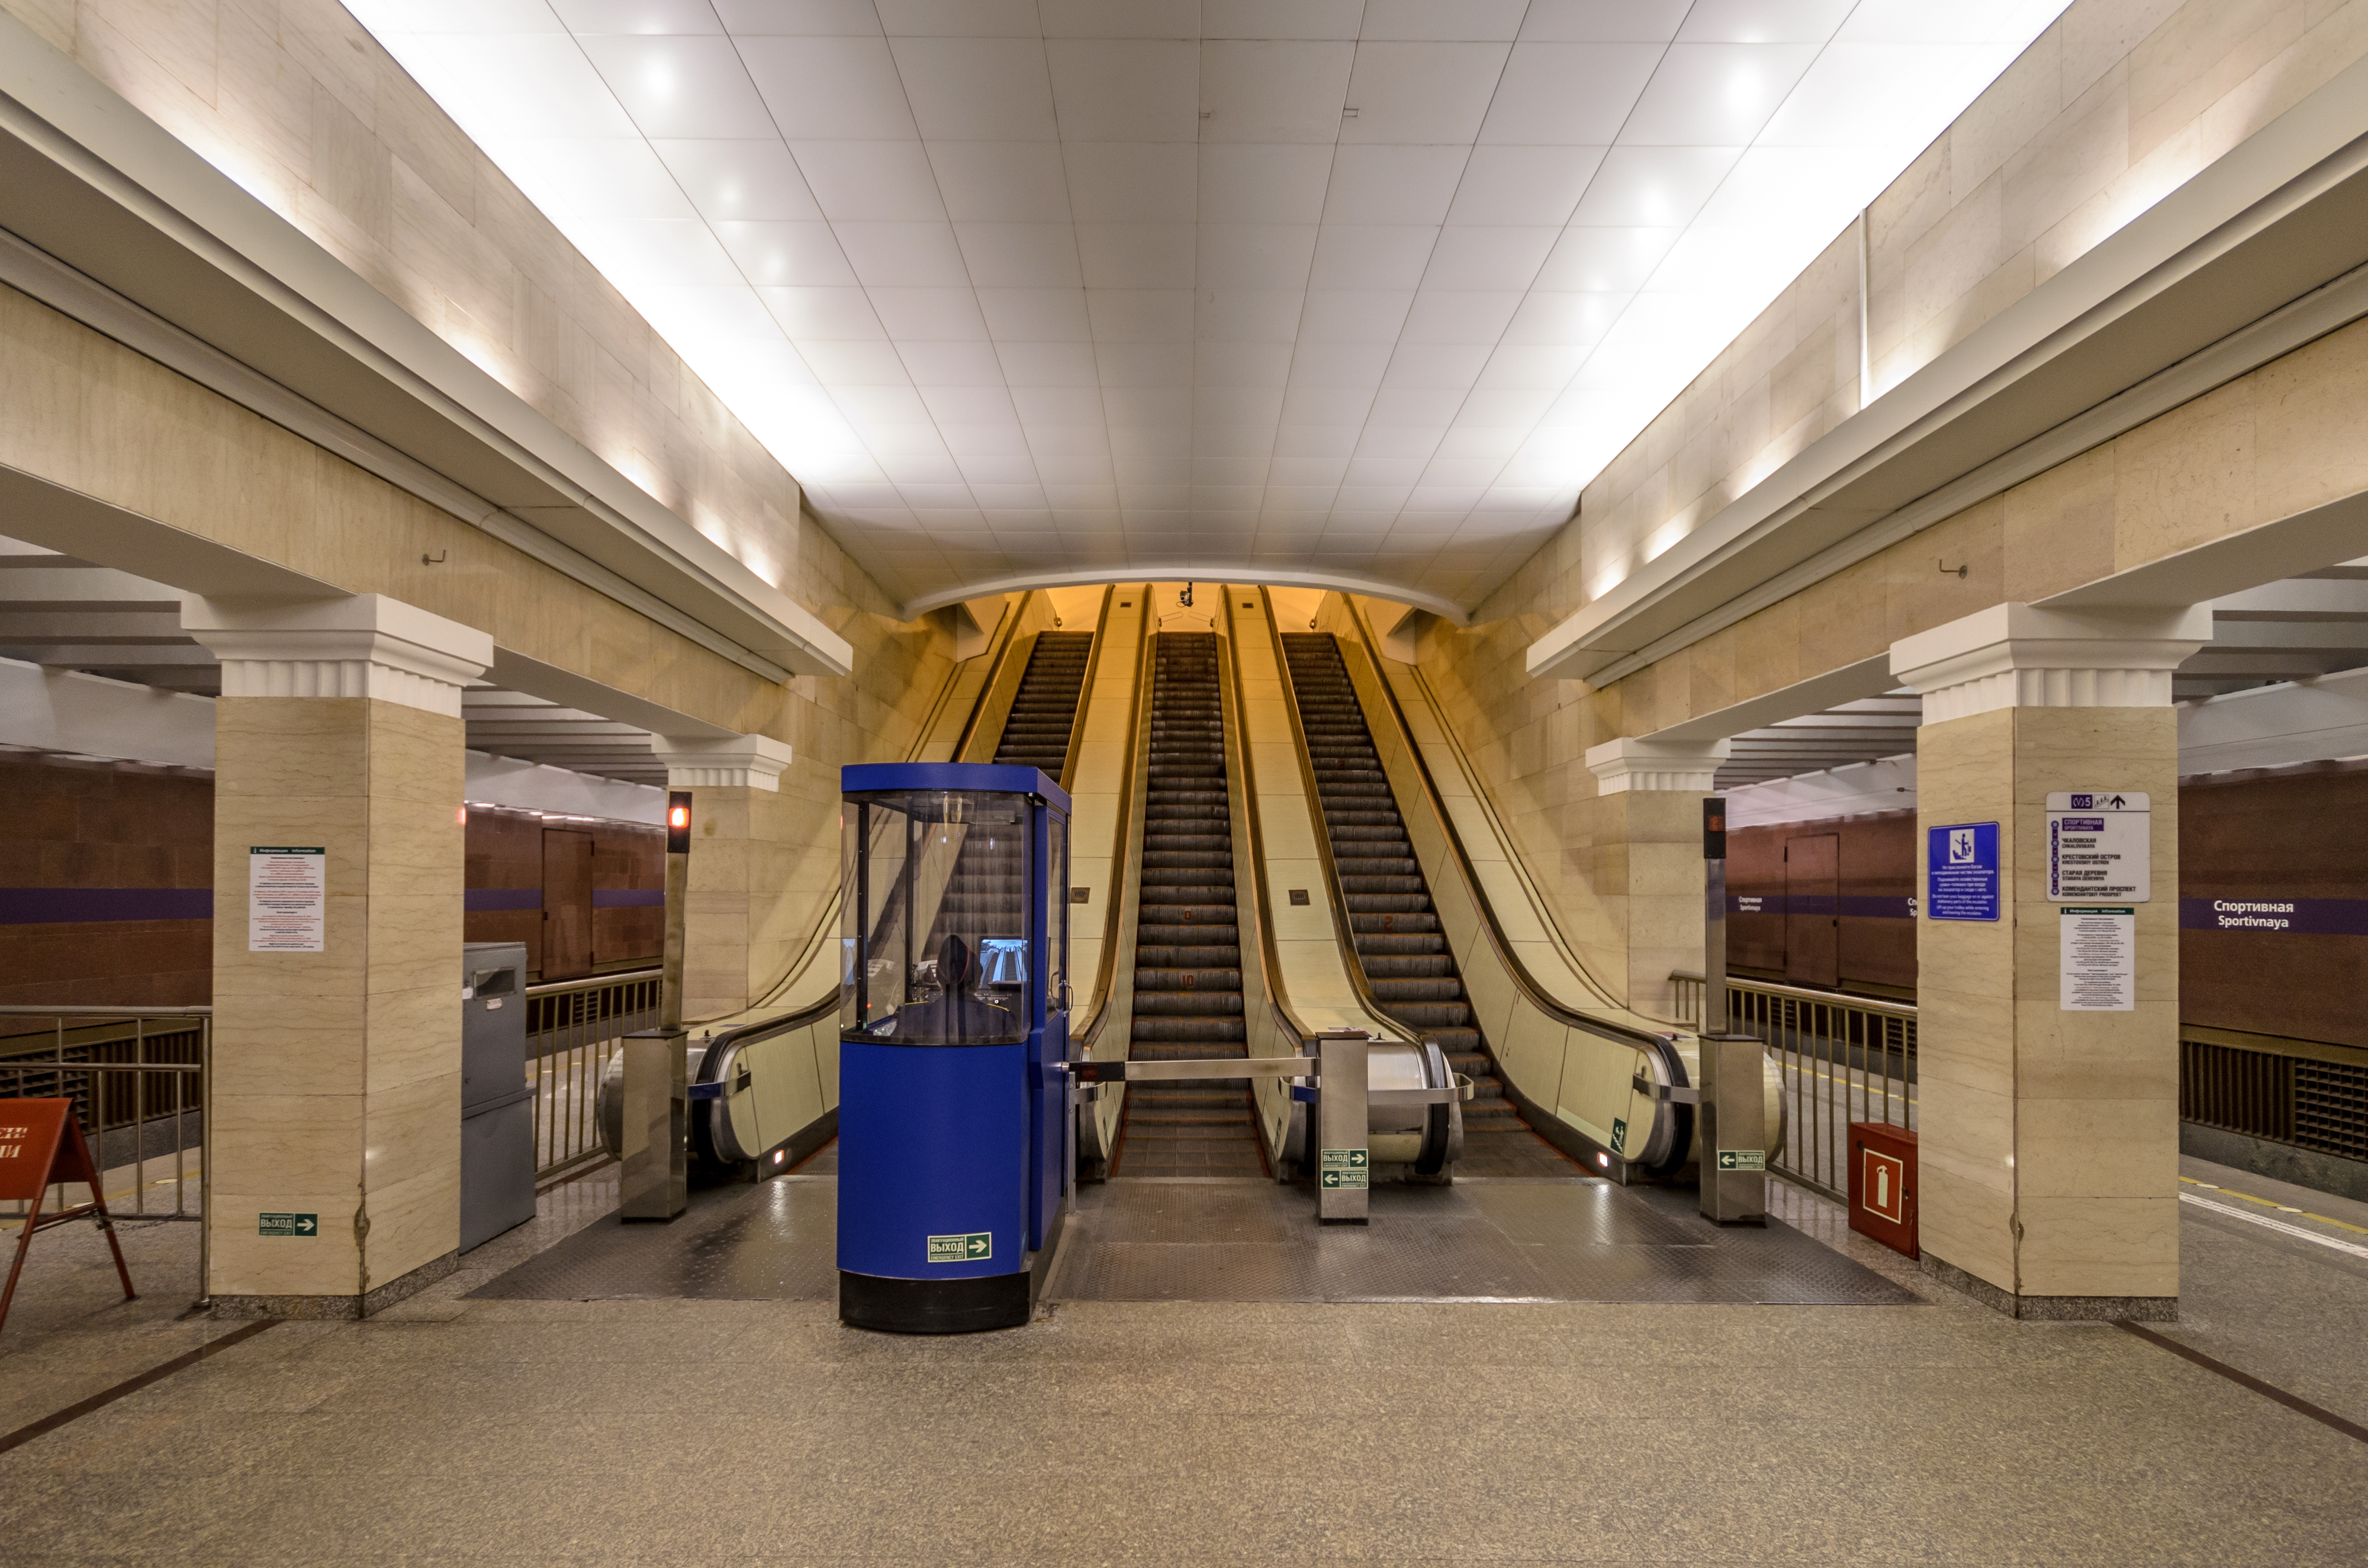 Metro SPB Line5 Sportivnaya Small Escalators